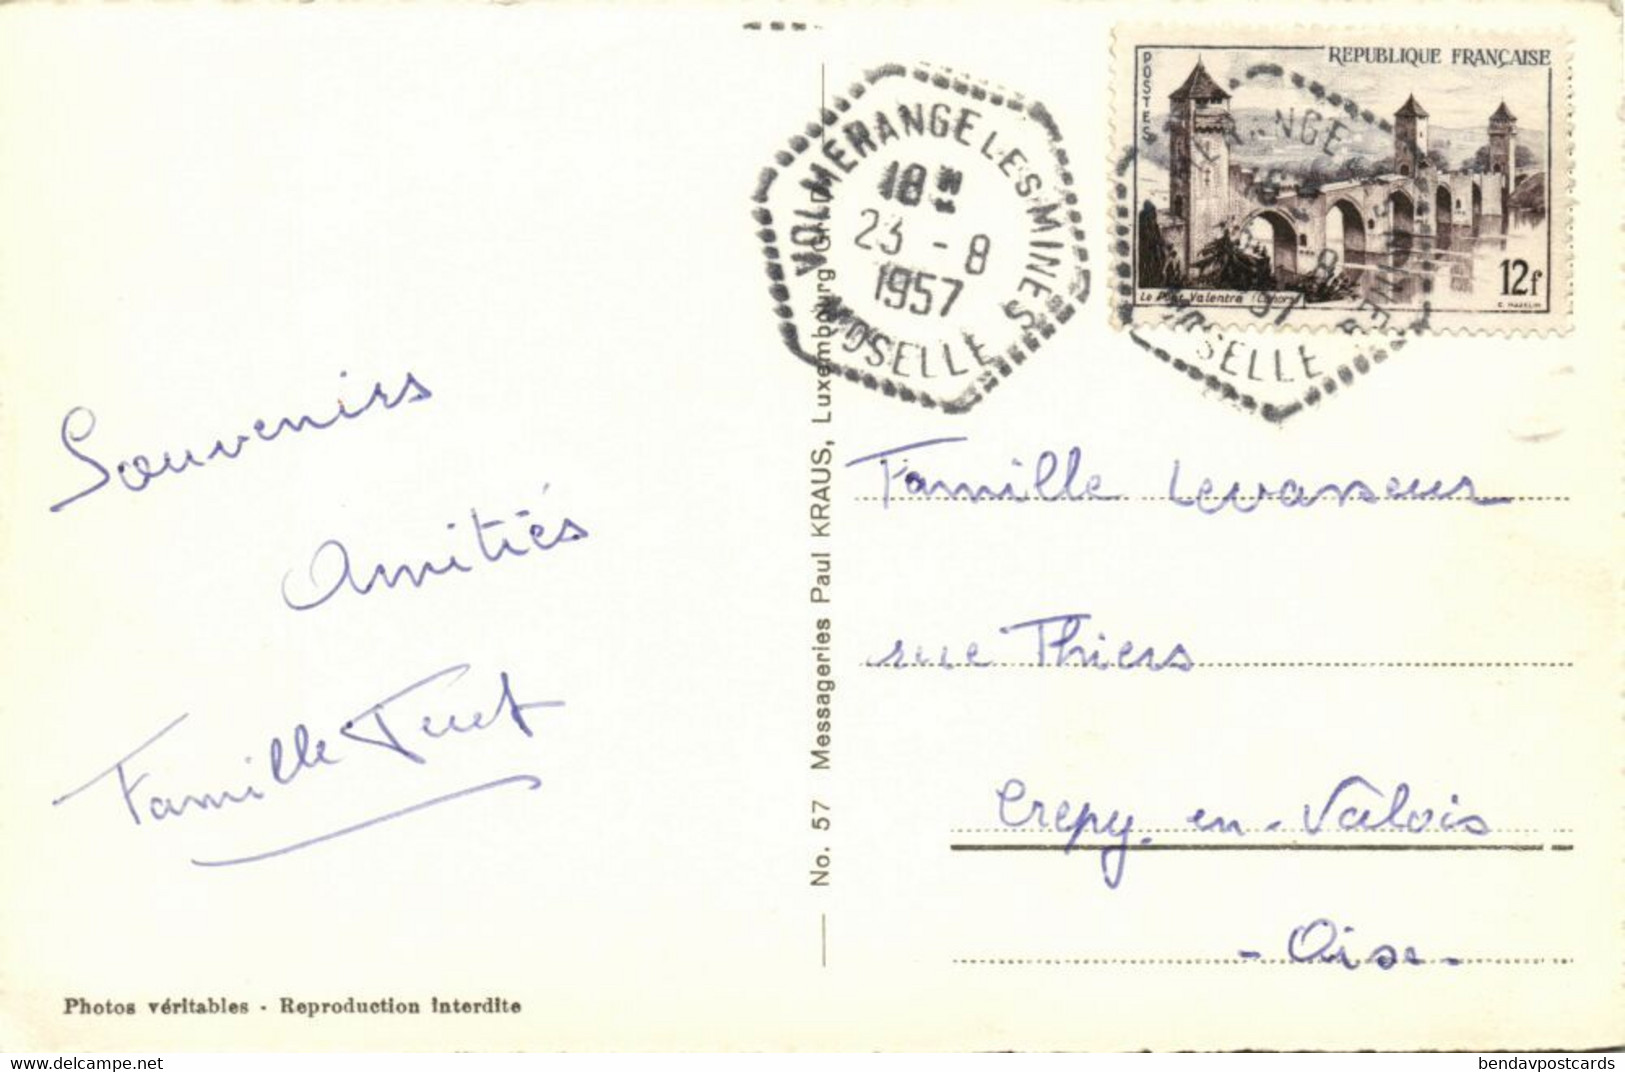 Luxemburg, DUDELANGE, Tele-Luxembourg Station D'émission (1957) RPPC Postcard - Dudelange